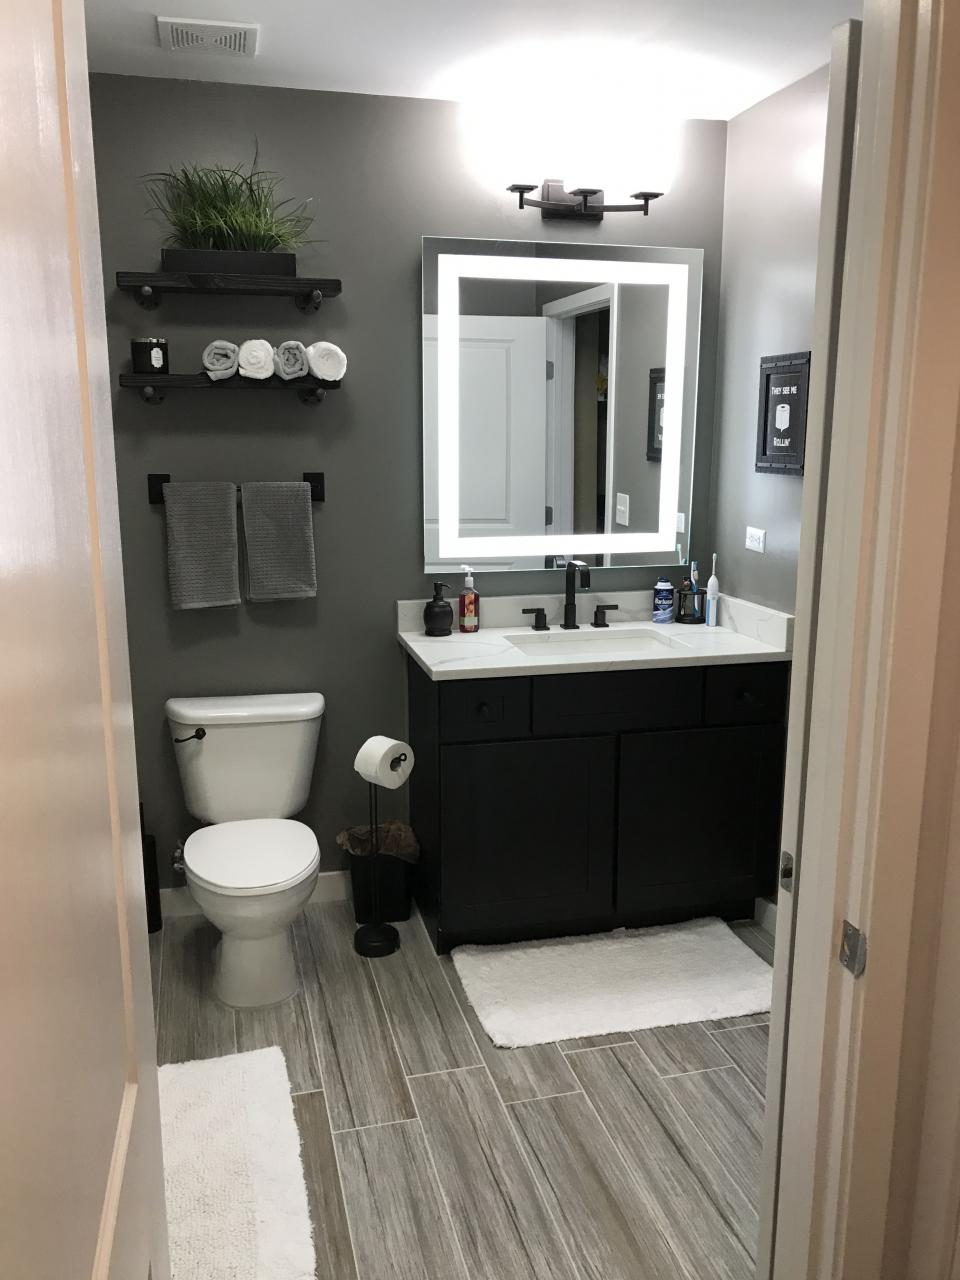 Grey bathroom / men's bathroom/ small / wood floor look / mirror